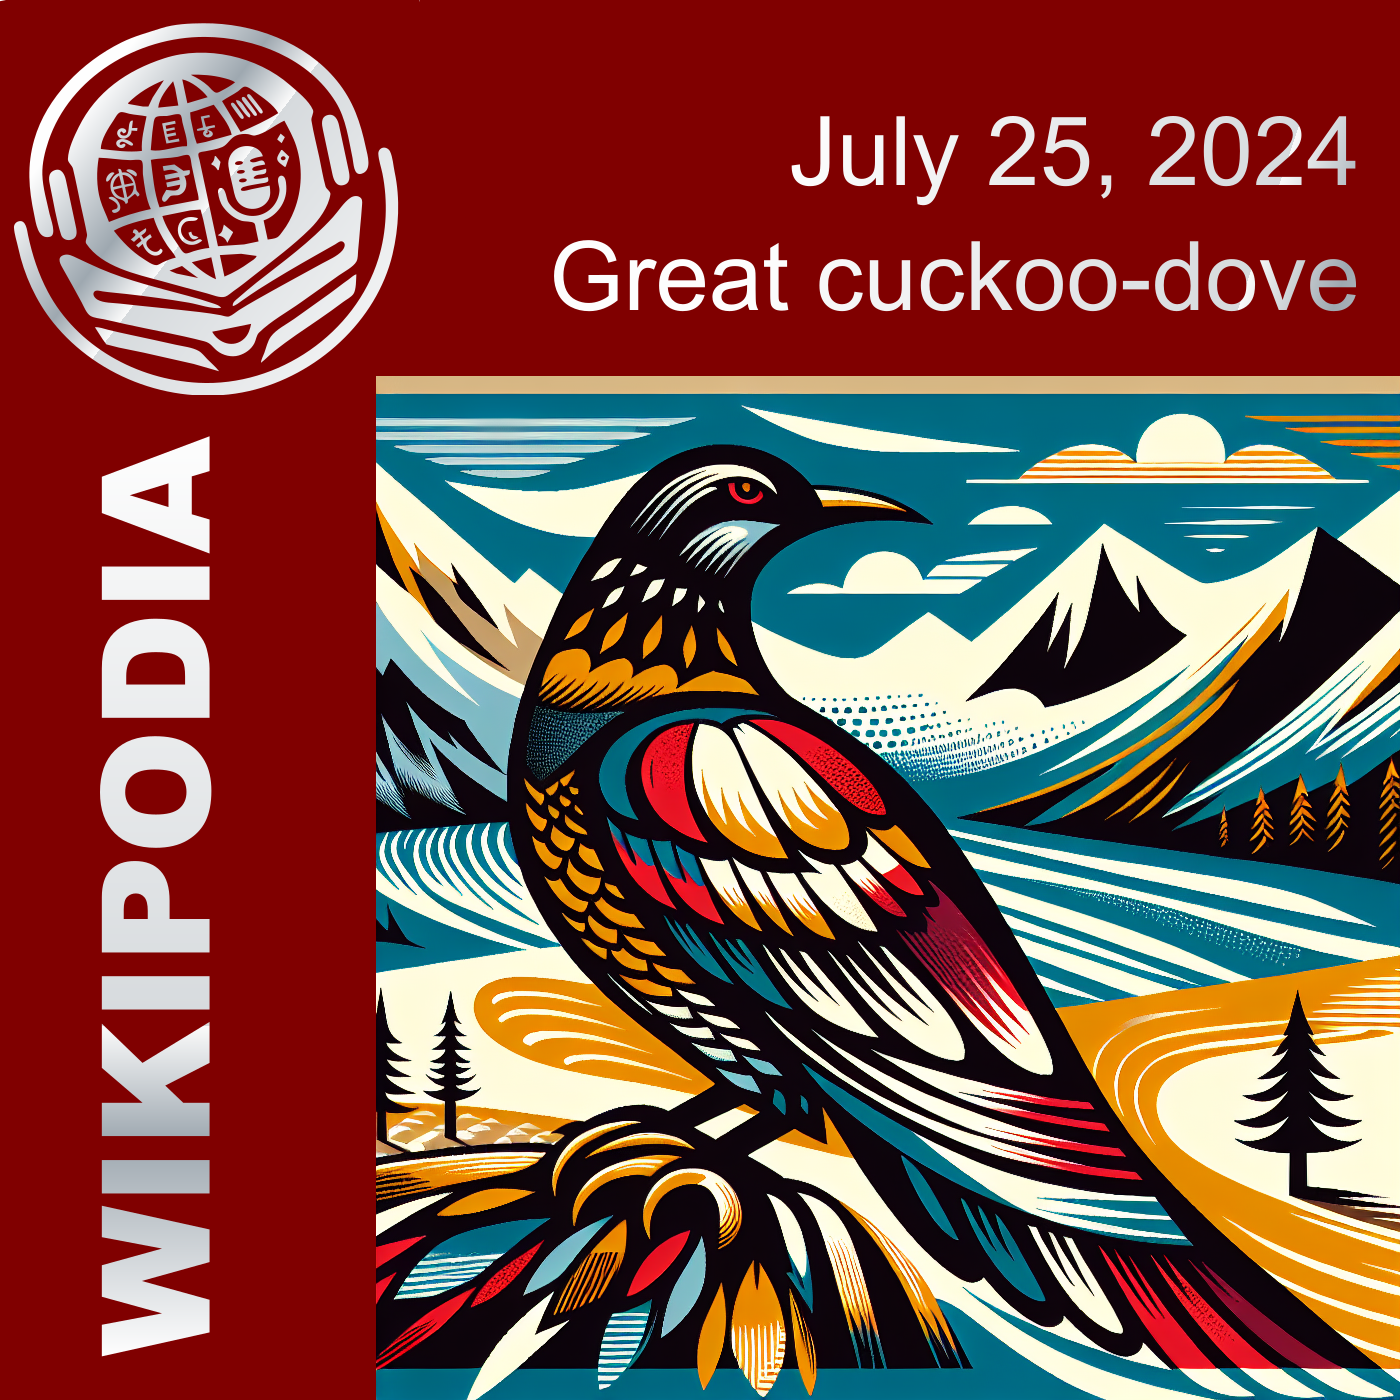 Great cuckoo-dove